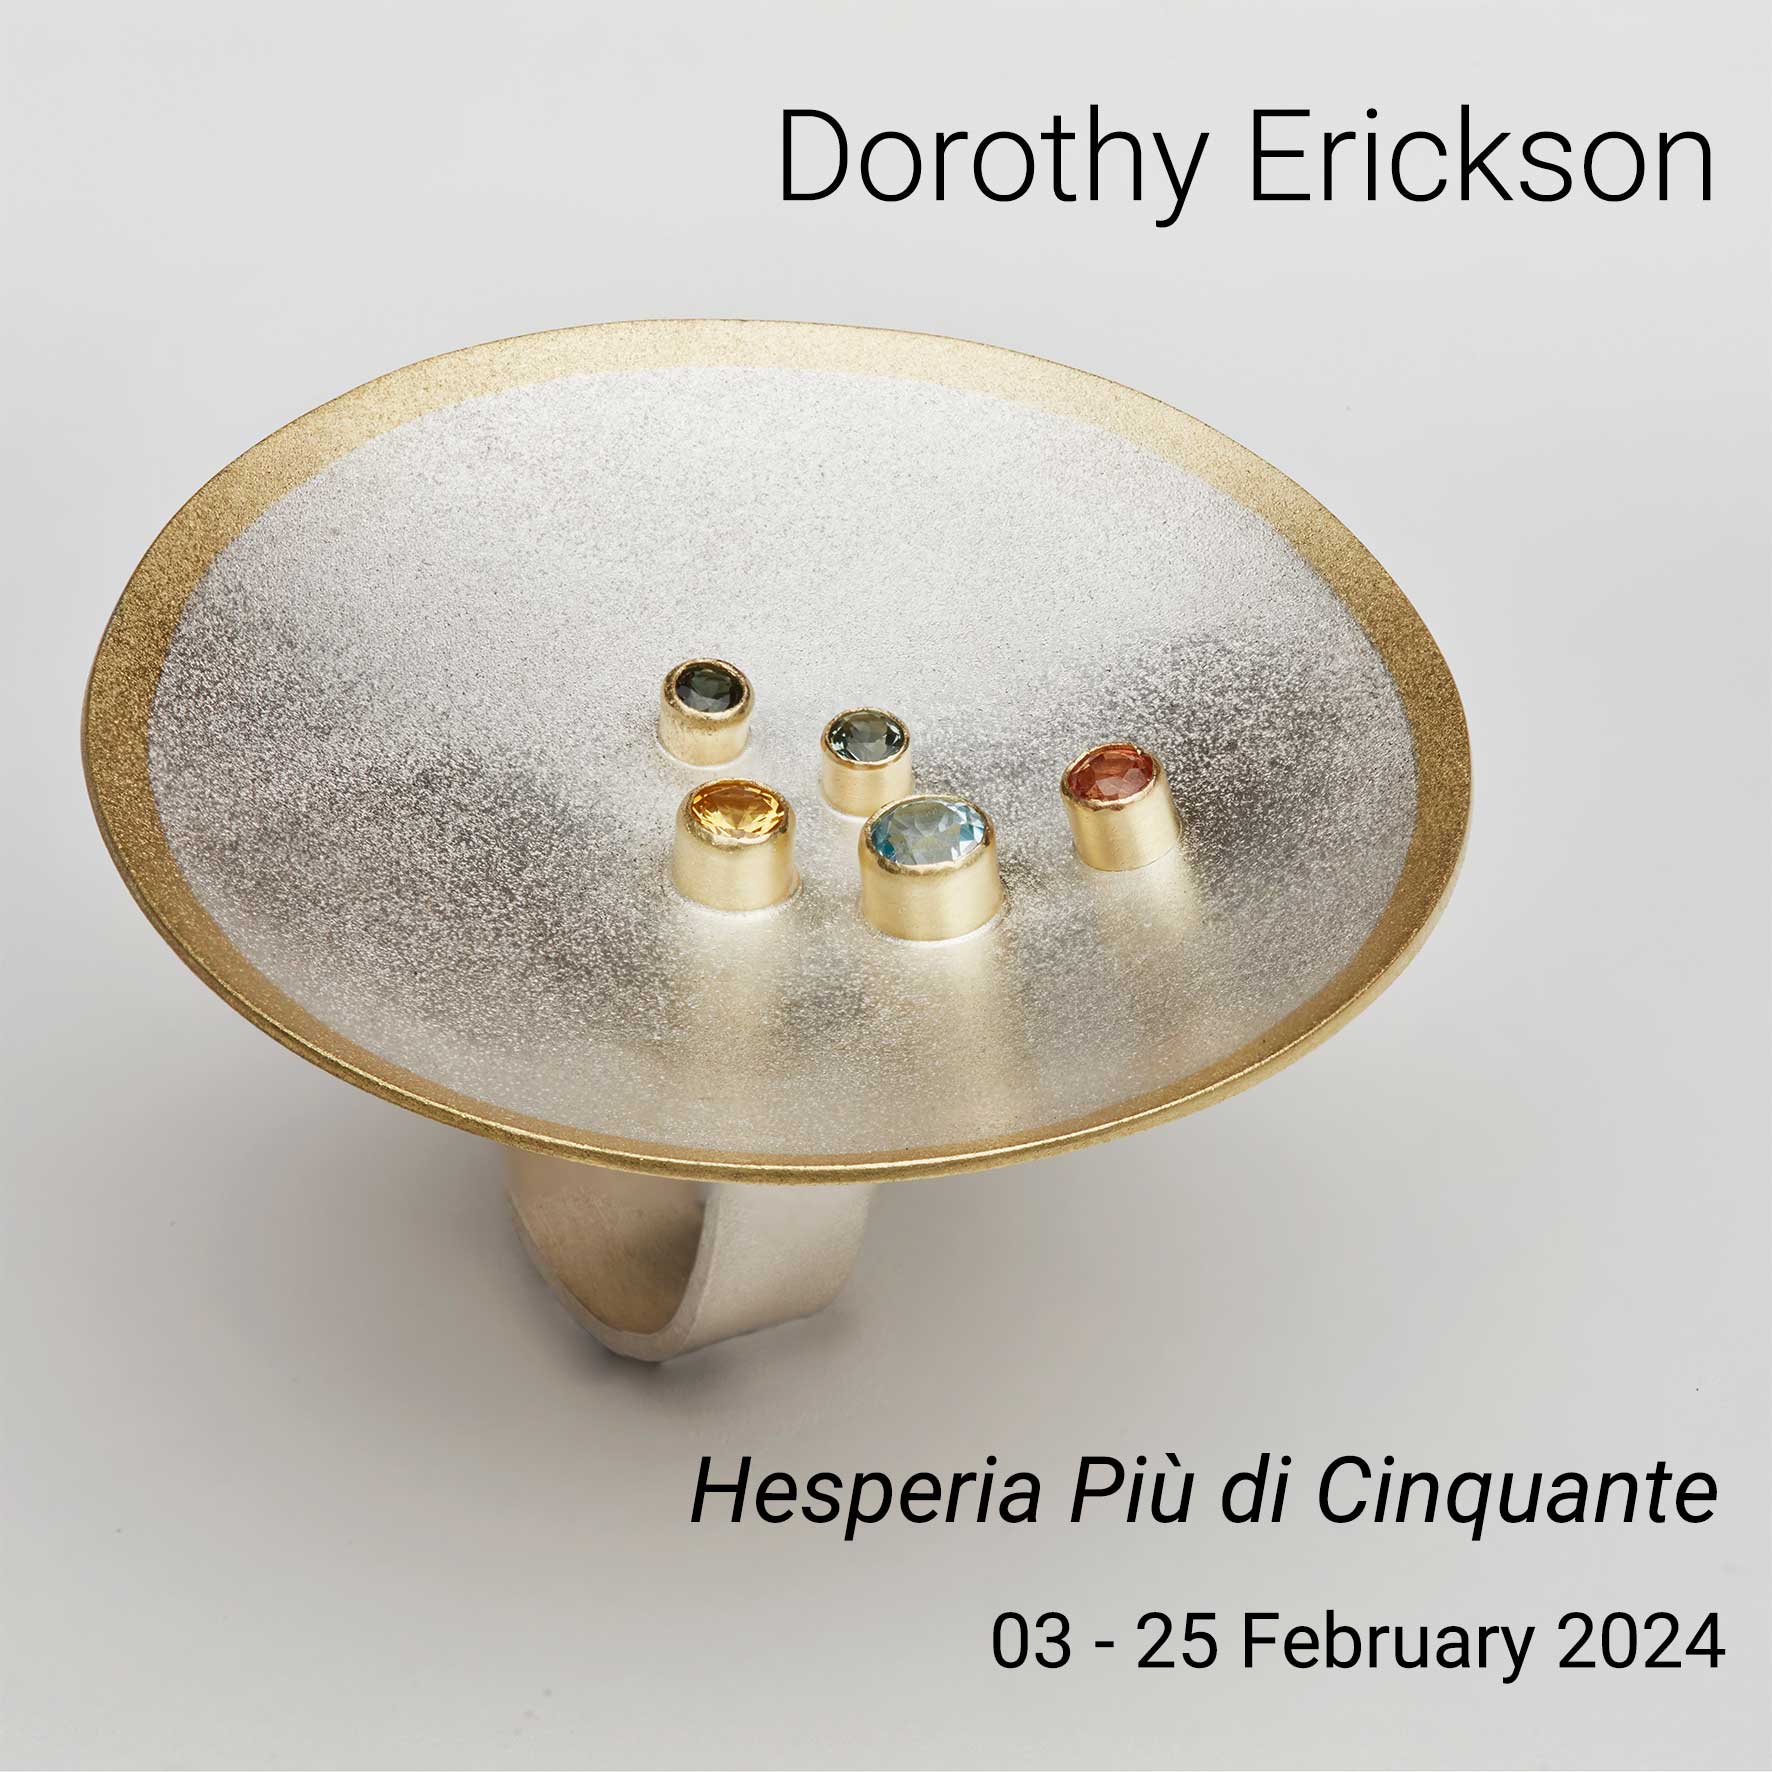 Dorothy Erickson ~ Hesperia: Più di Cinquante – Celebrating 50+ years of making jewellery. 03 - 25 February 2024 | Arstite Contemporary Gallery Sydney, Australia. Browse | Acquire | Collect.